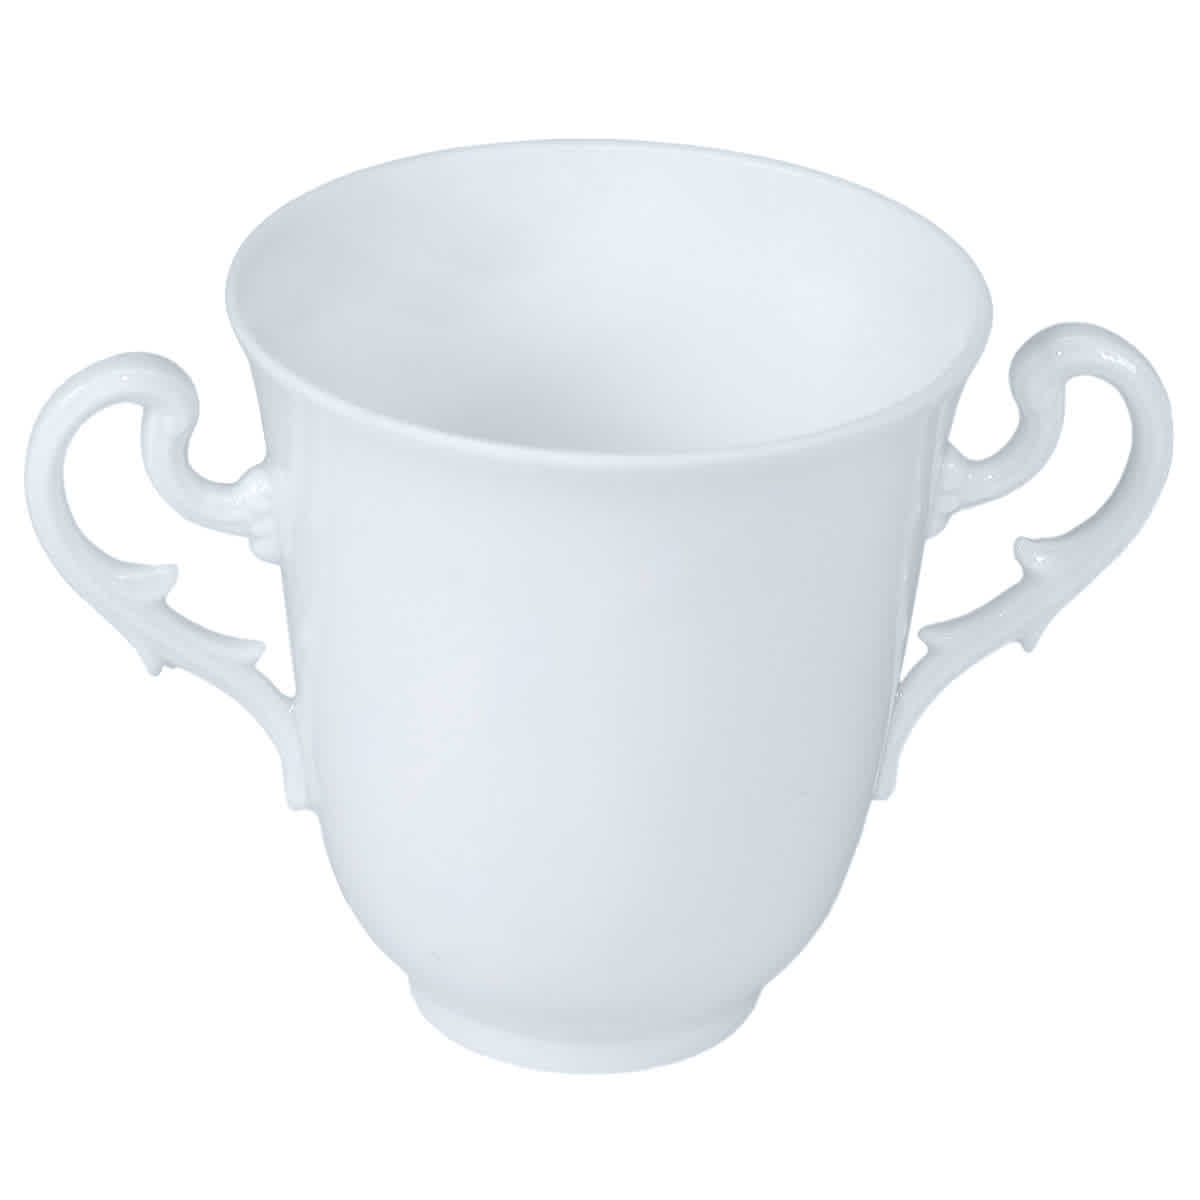 Ginori 1735 Soup Cup In White